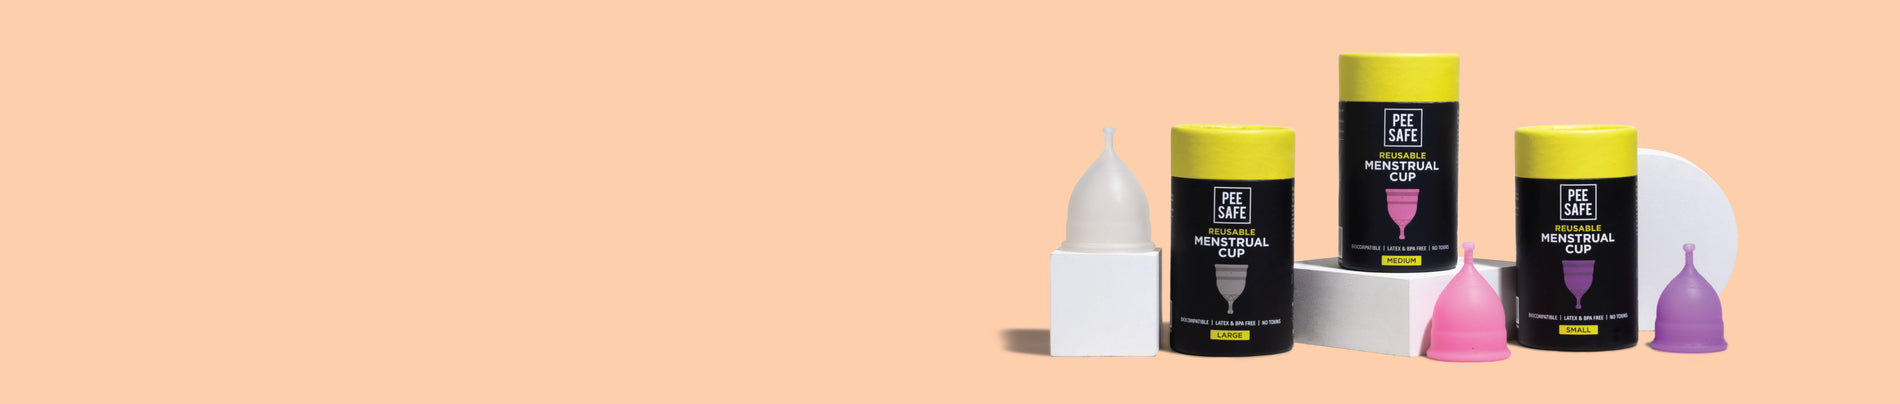 Reusable Menstrual Cup | Pee Safe Menstrual Cup 